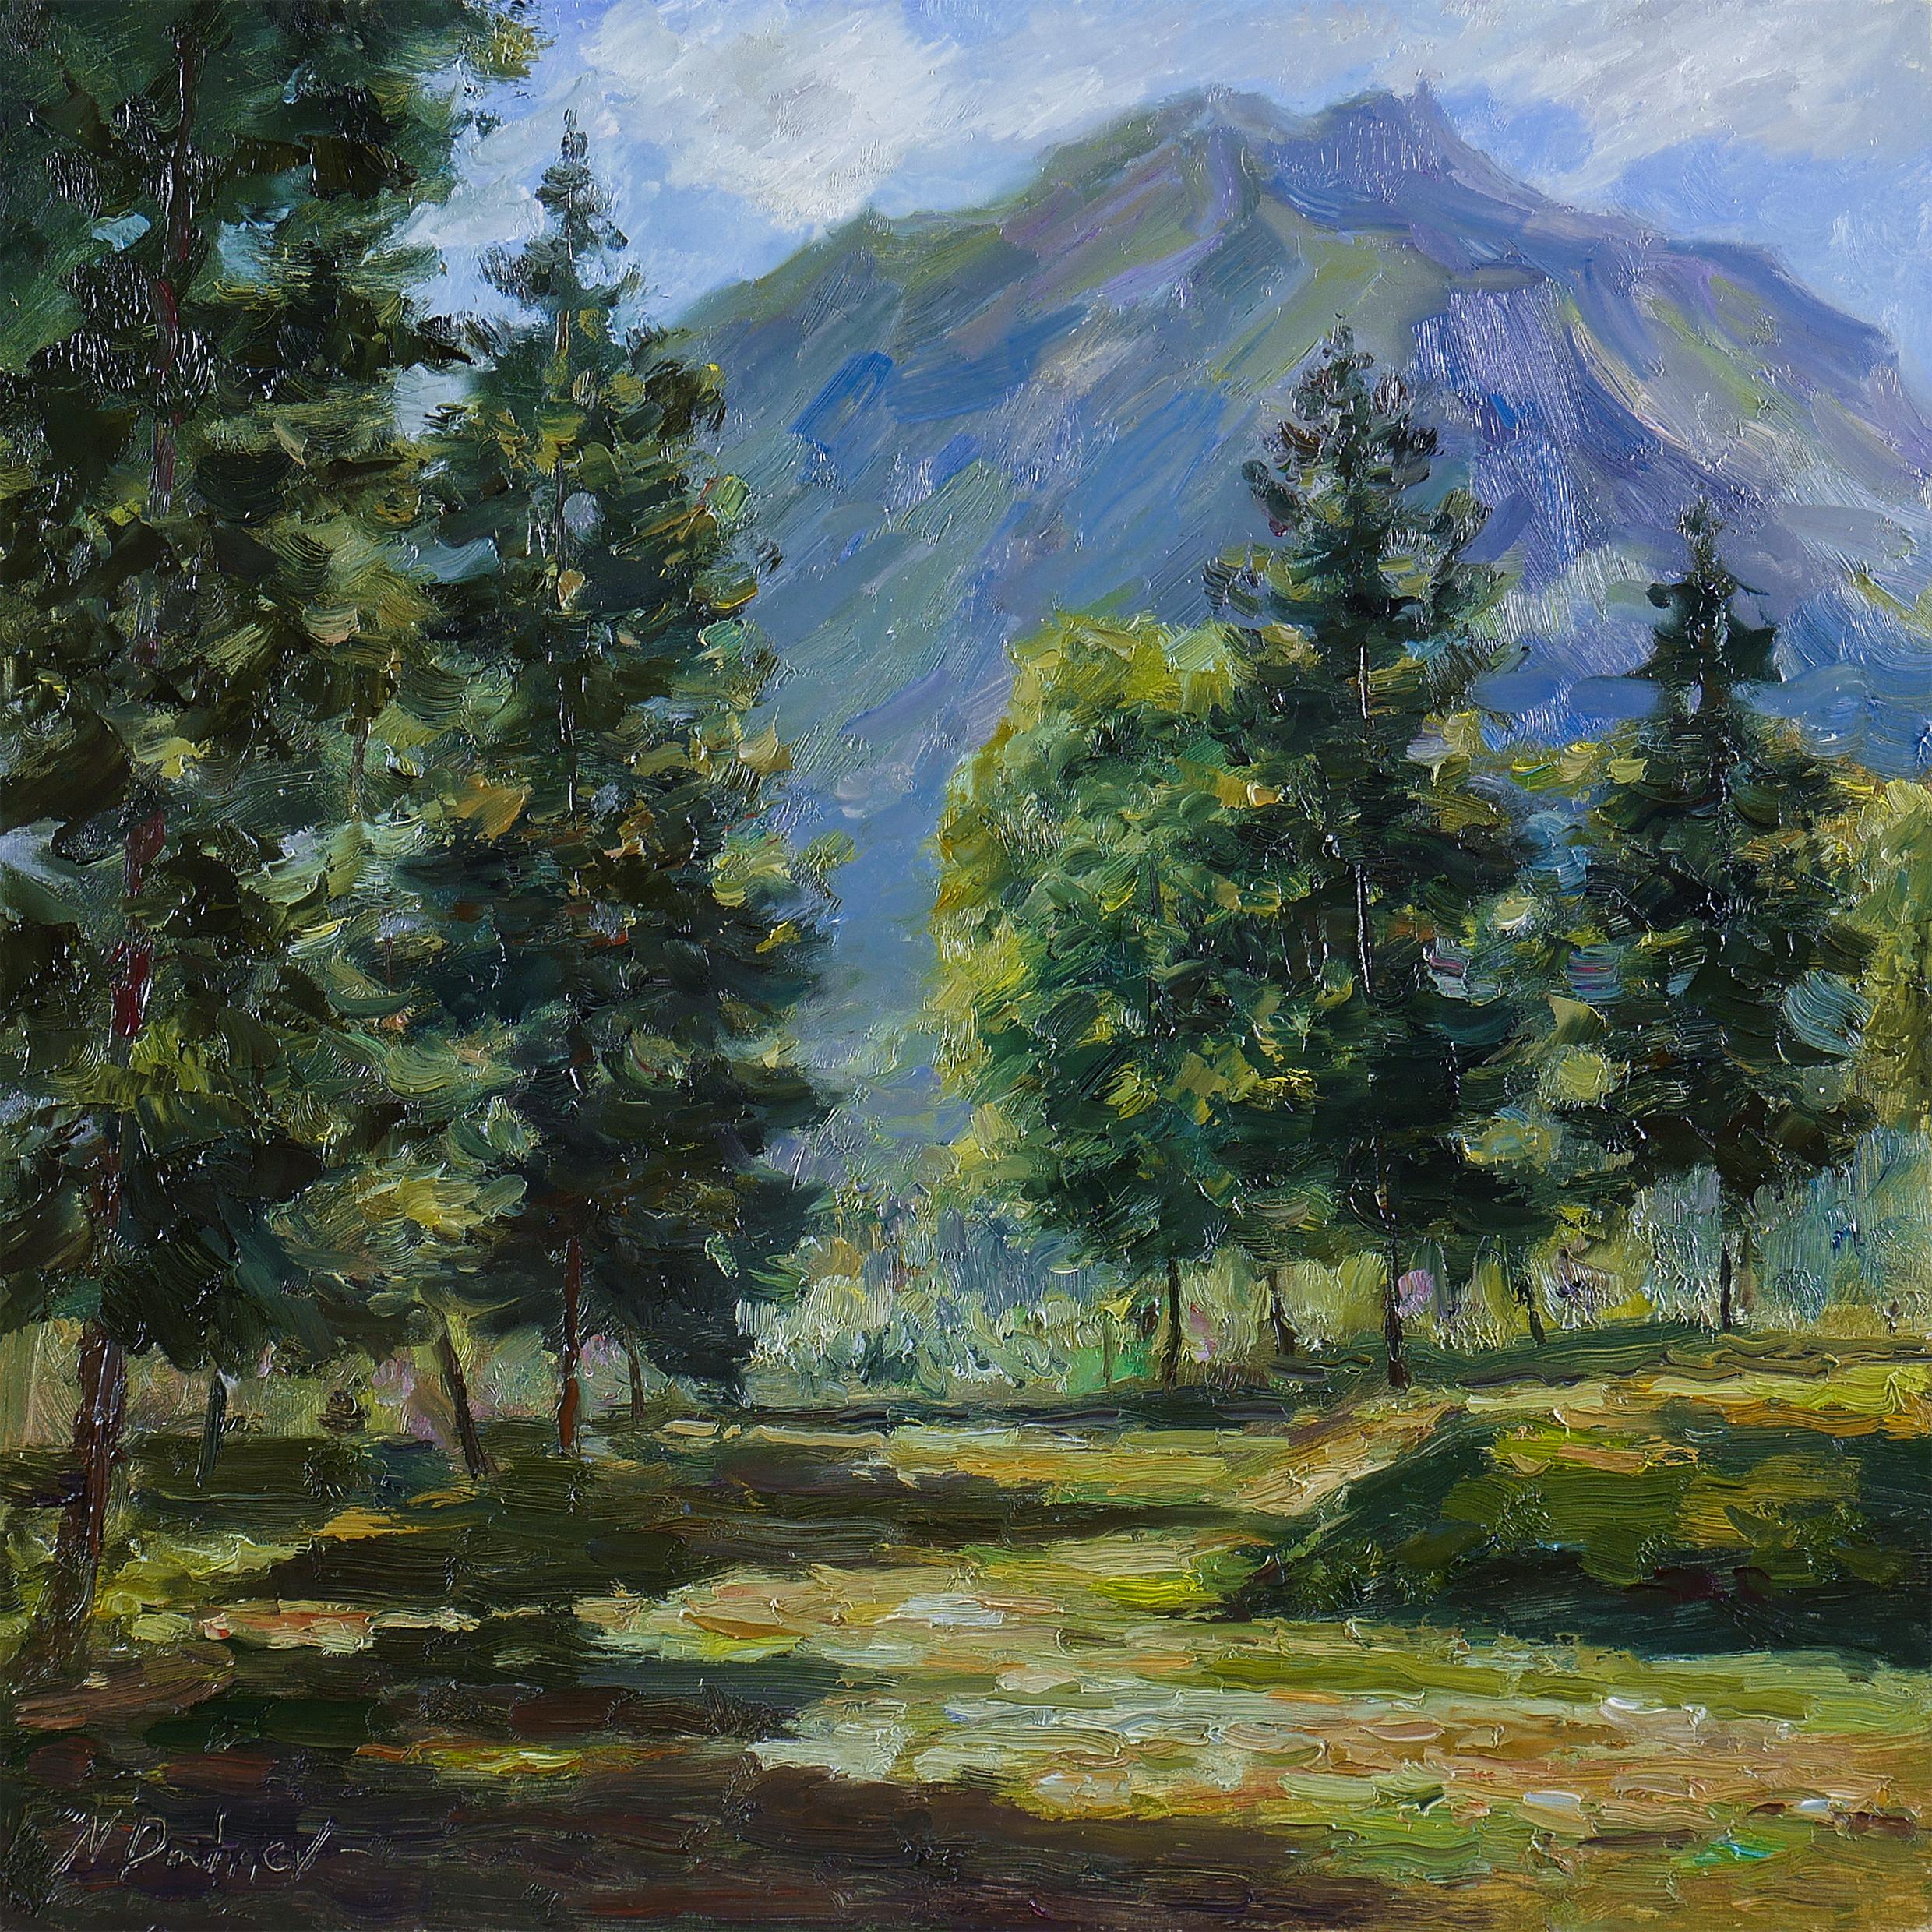 Nikolay Dmitriev Landscape Painting - Morning in the mountains - mountain landscape painting